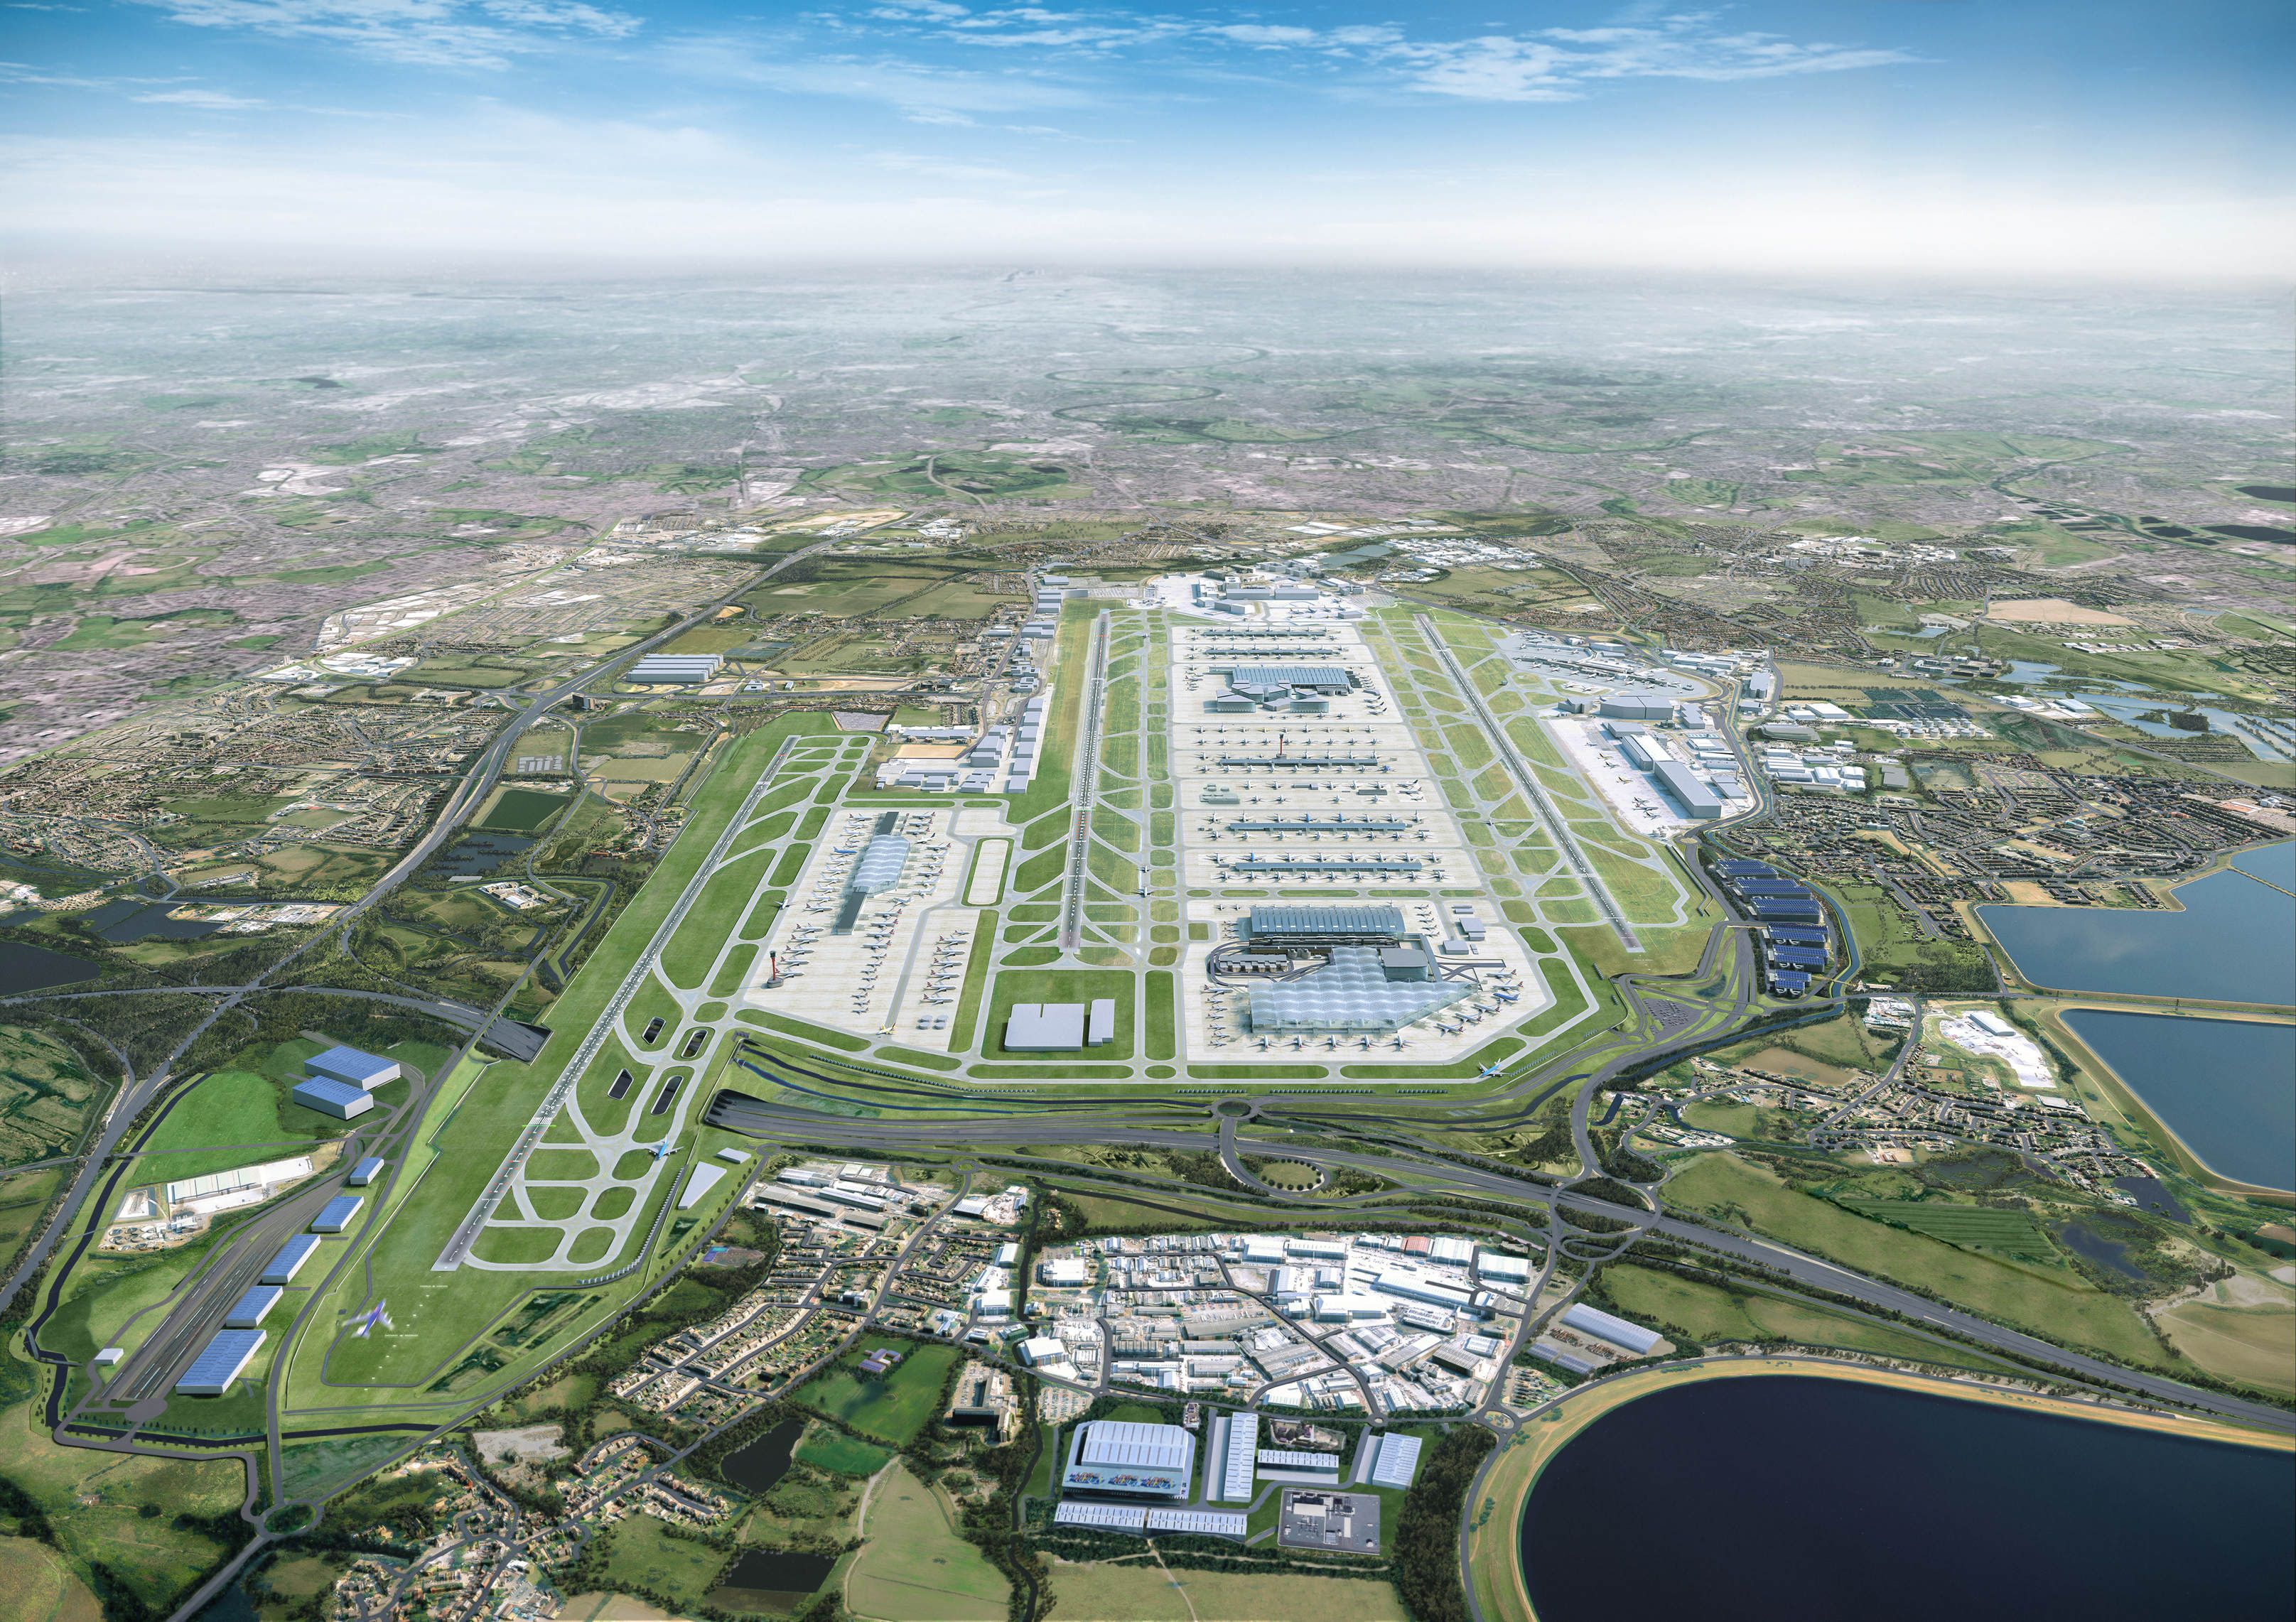 An aerial view of London Heathrow Airport.